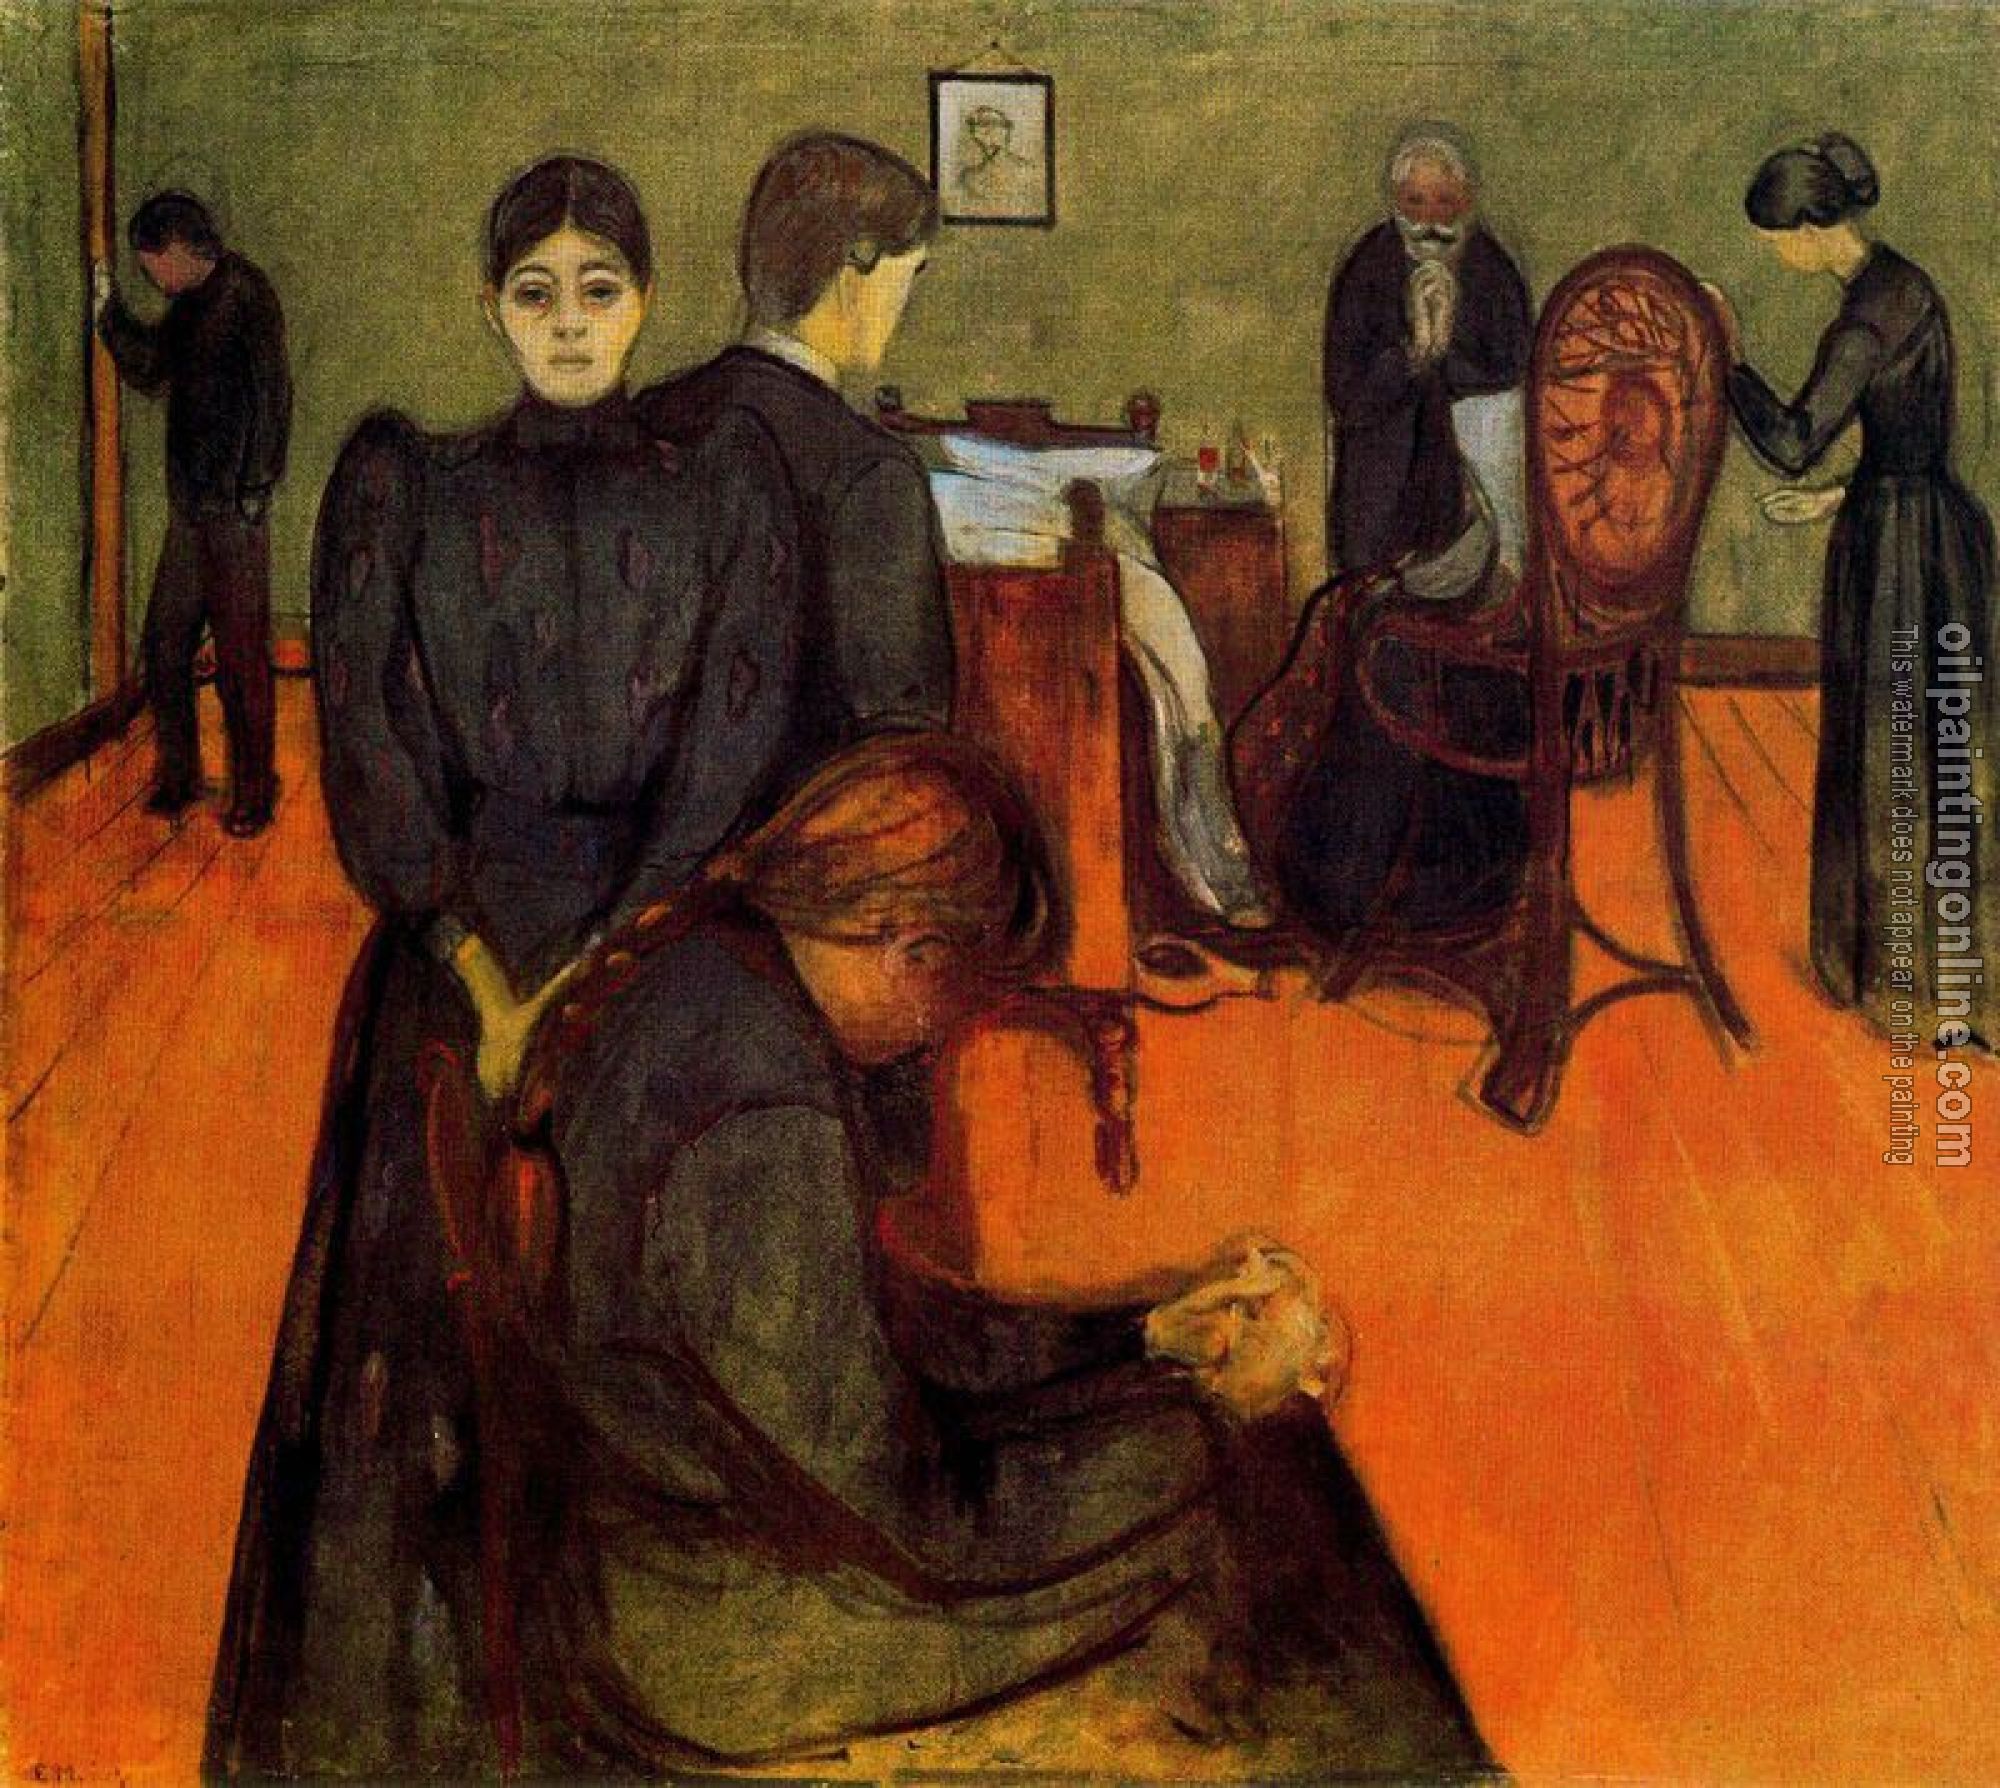 Munch, Edvard - Death in the Sickroom